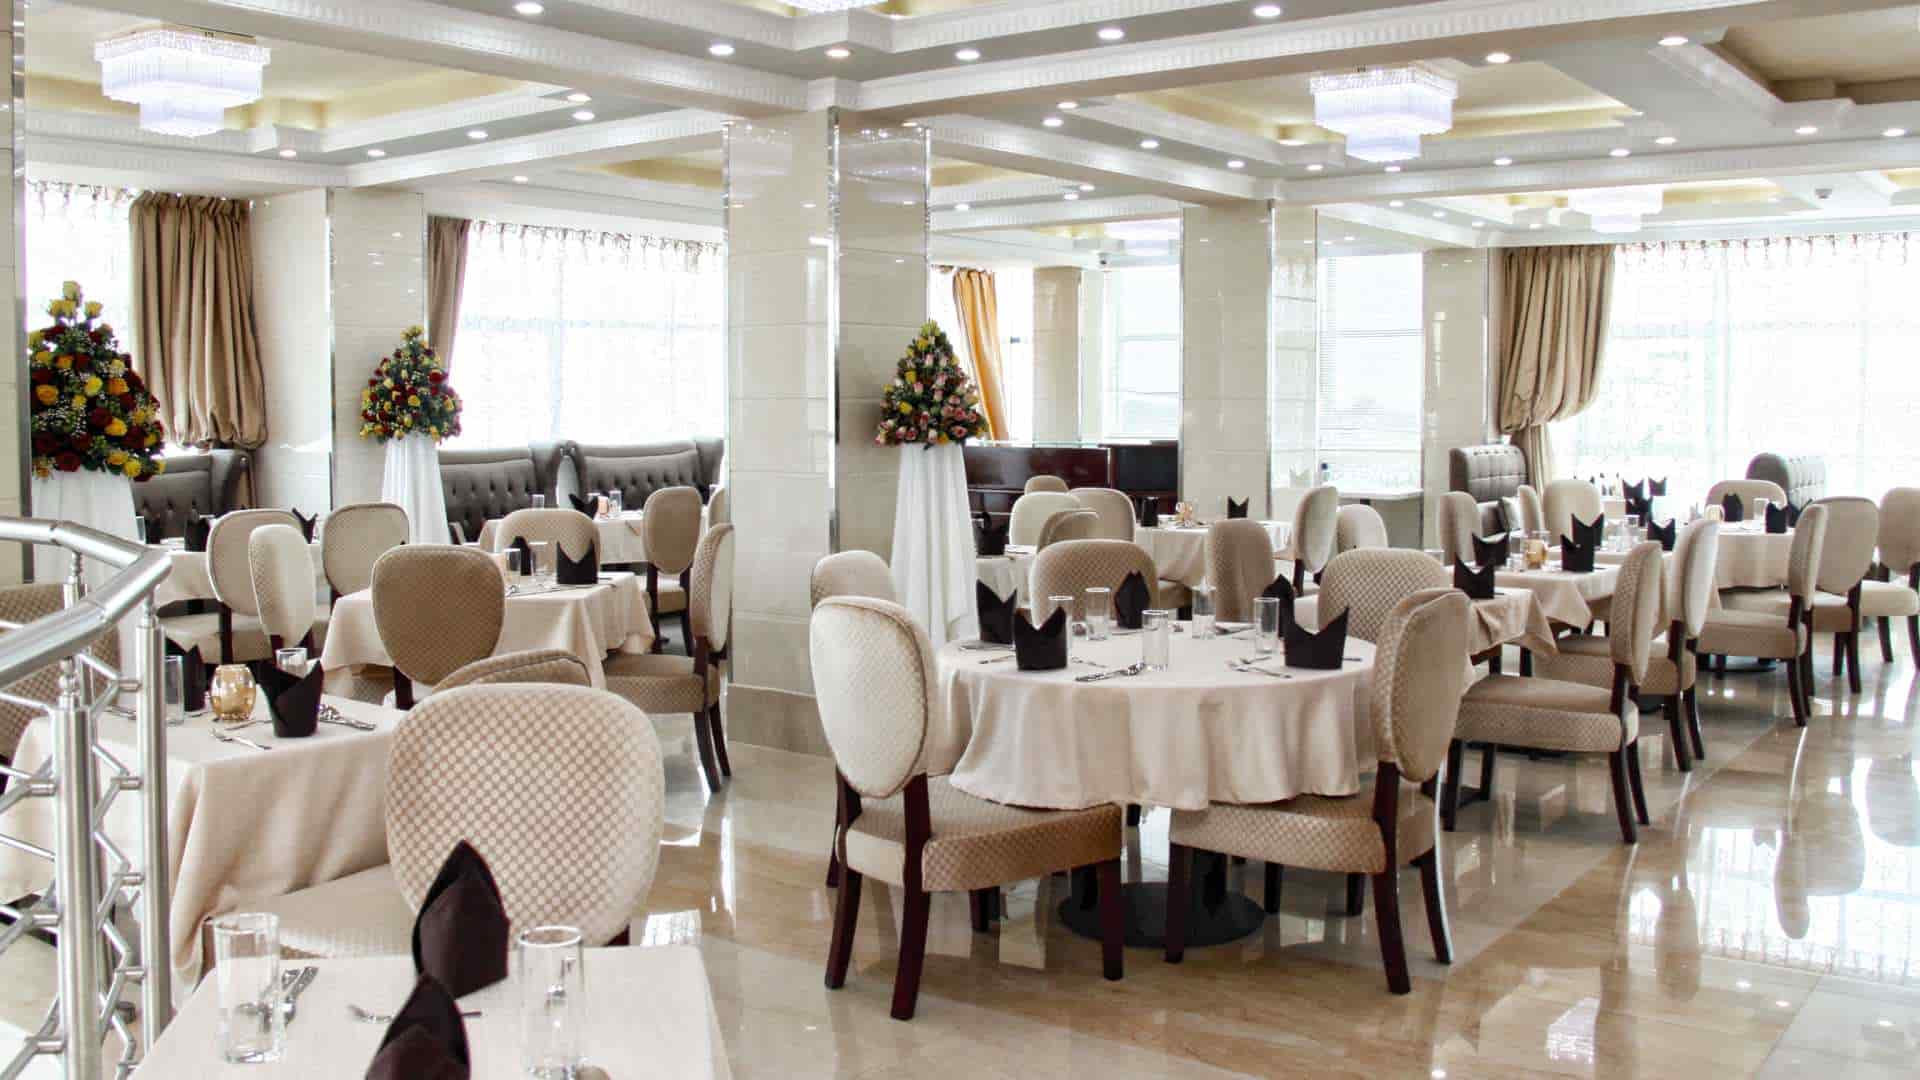 Addissinia Hotel Restaurant, Addis Ababa, Ethiopia